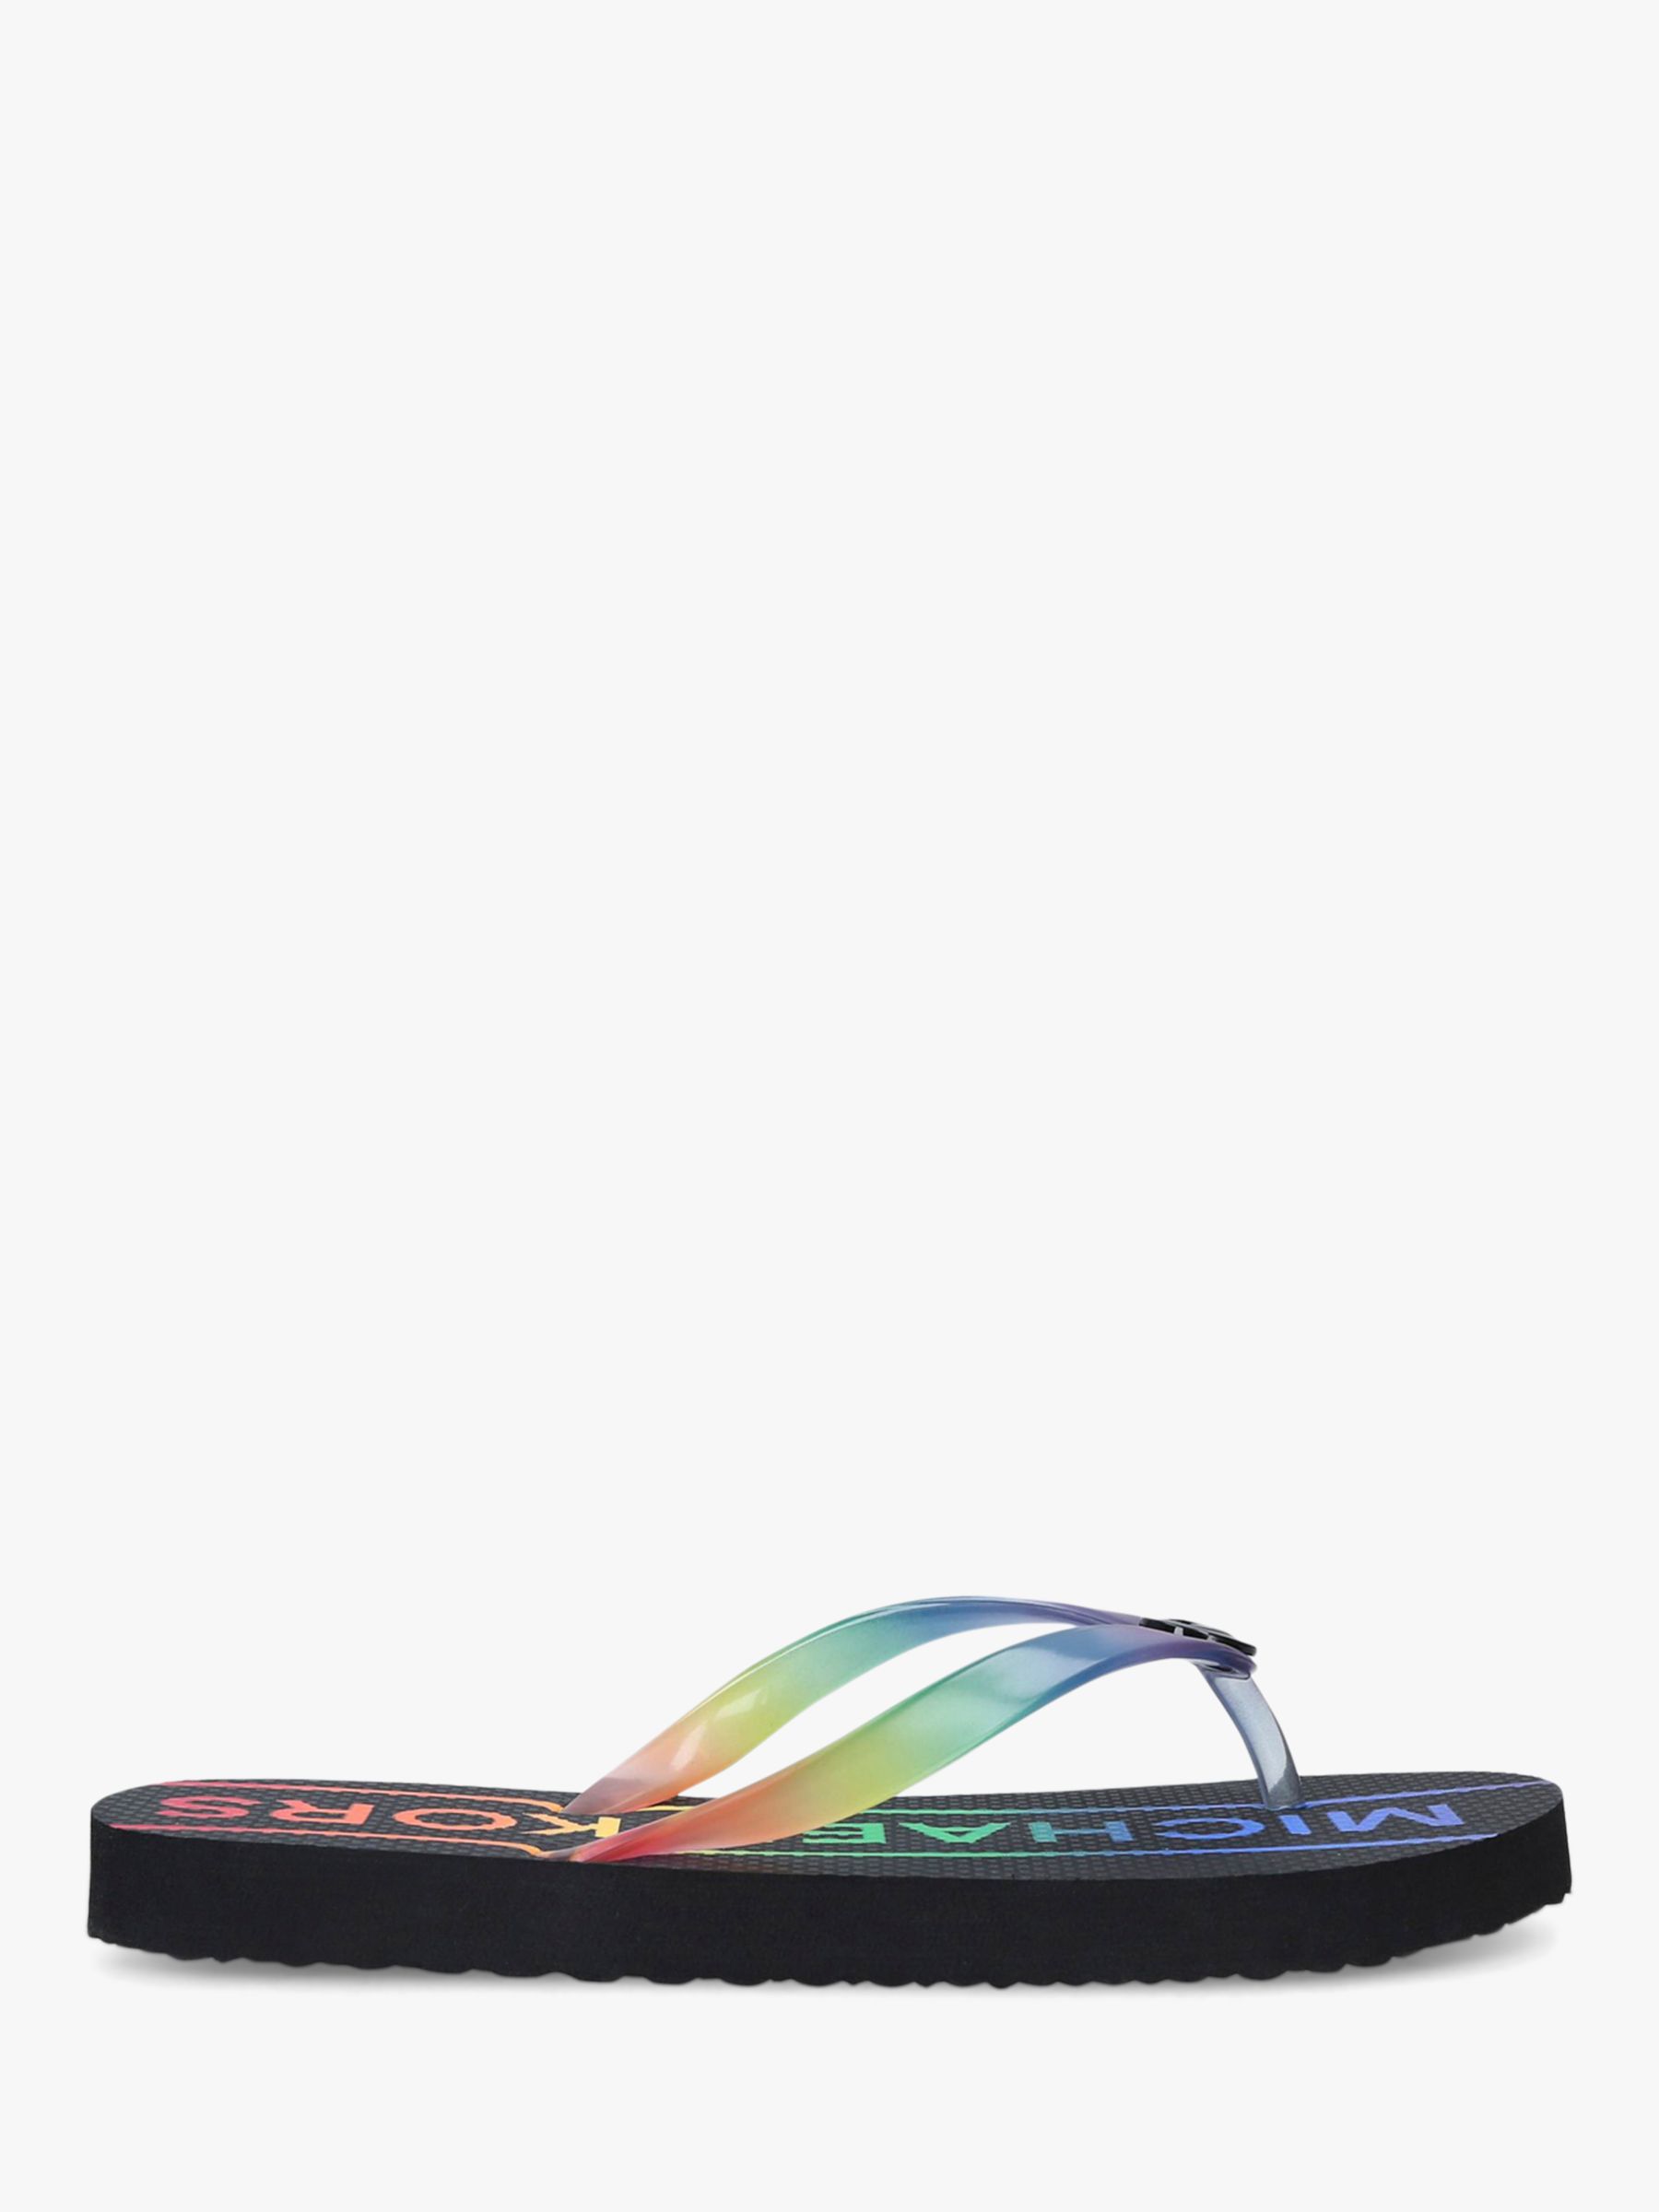 michael kors rainbow shoes